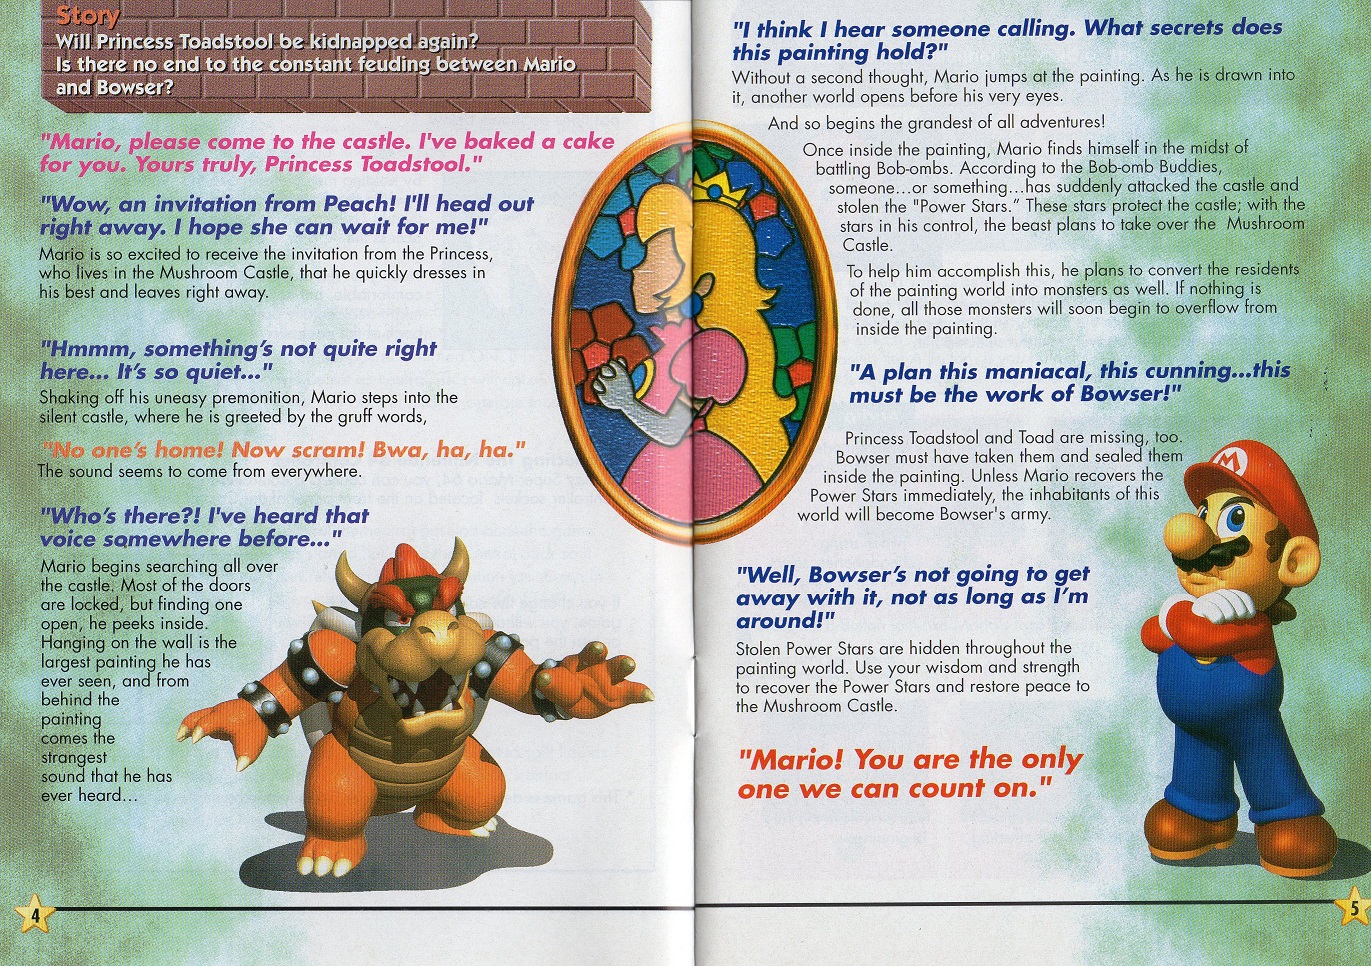 Super Mario 64 manual page 4 and 5